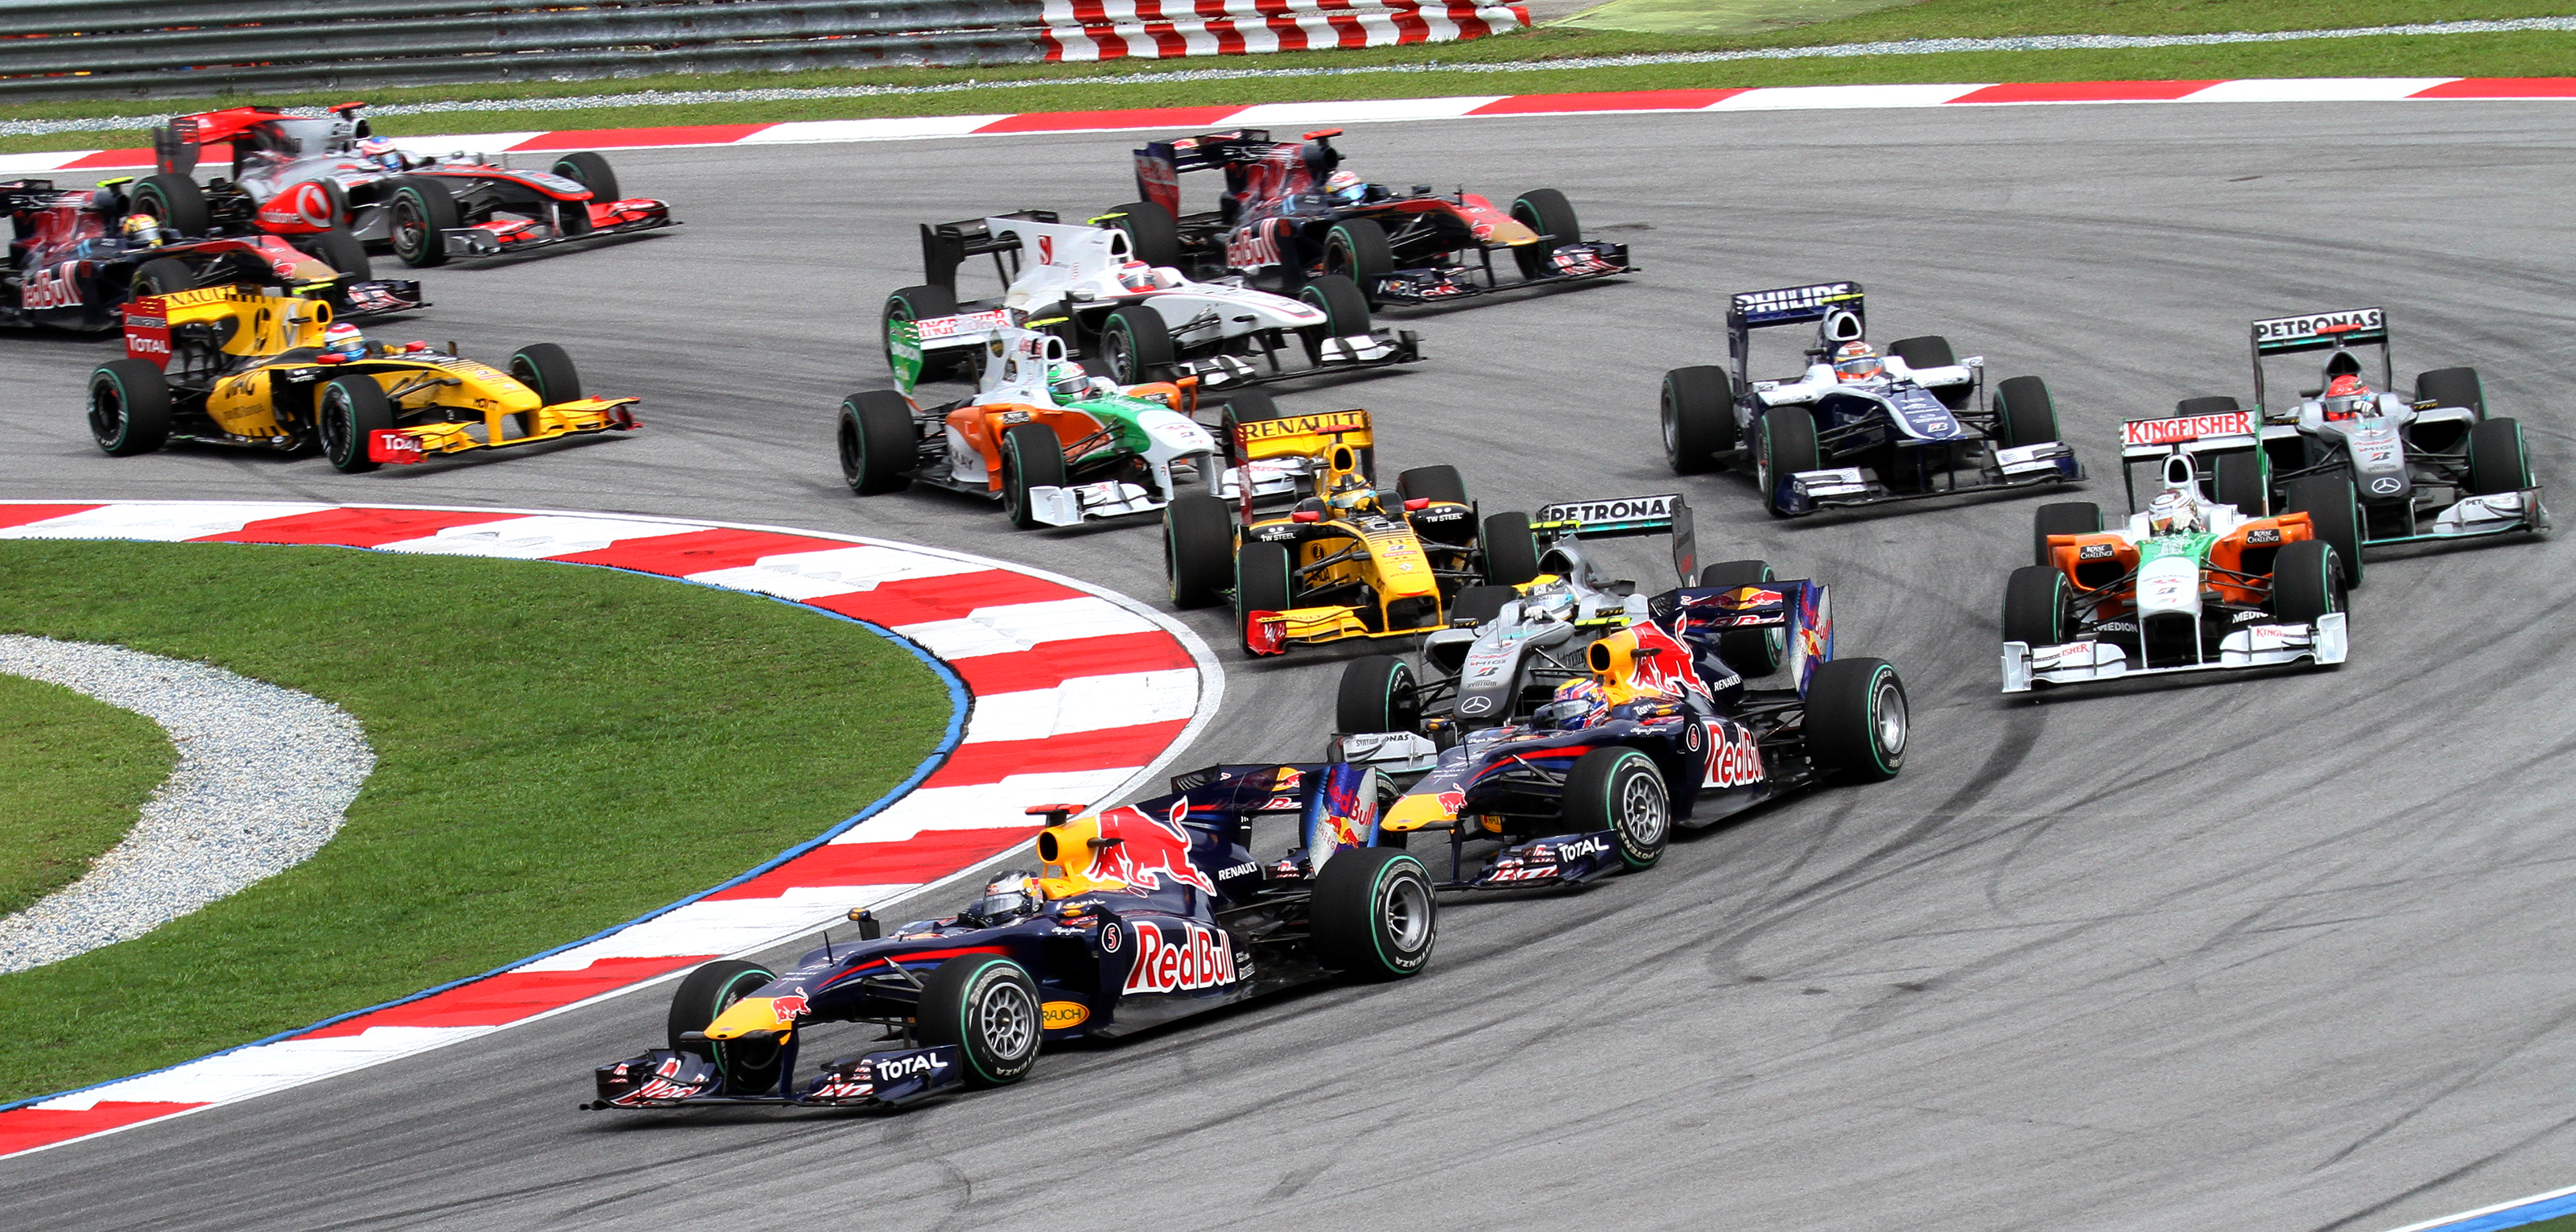 2010 Malaysian GP opening lap